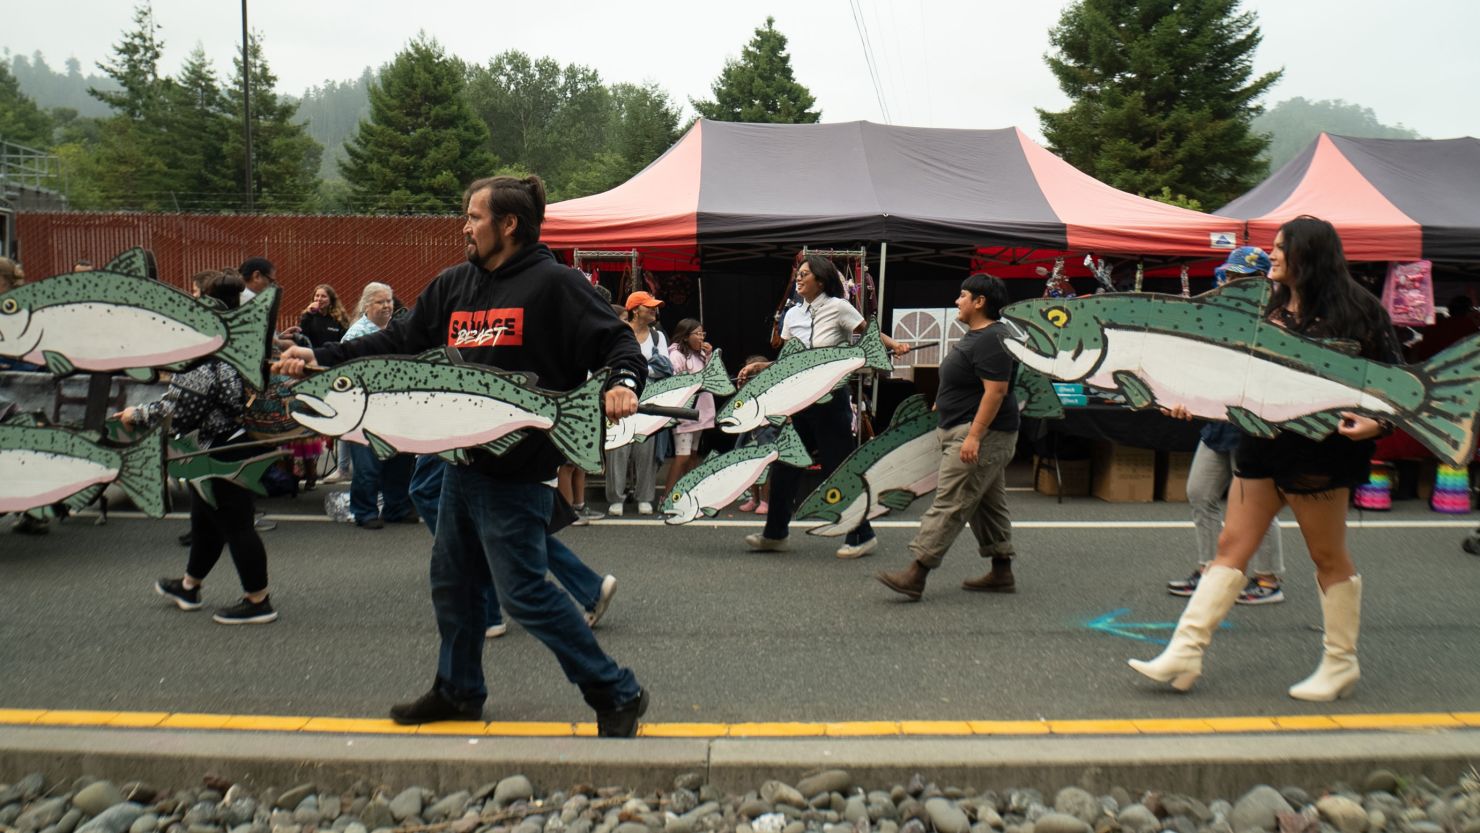 The Salmon Festival parade in Klamath, California.